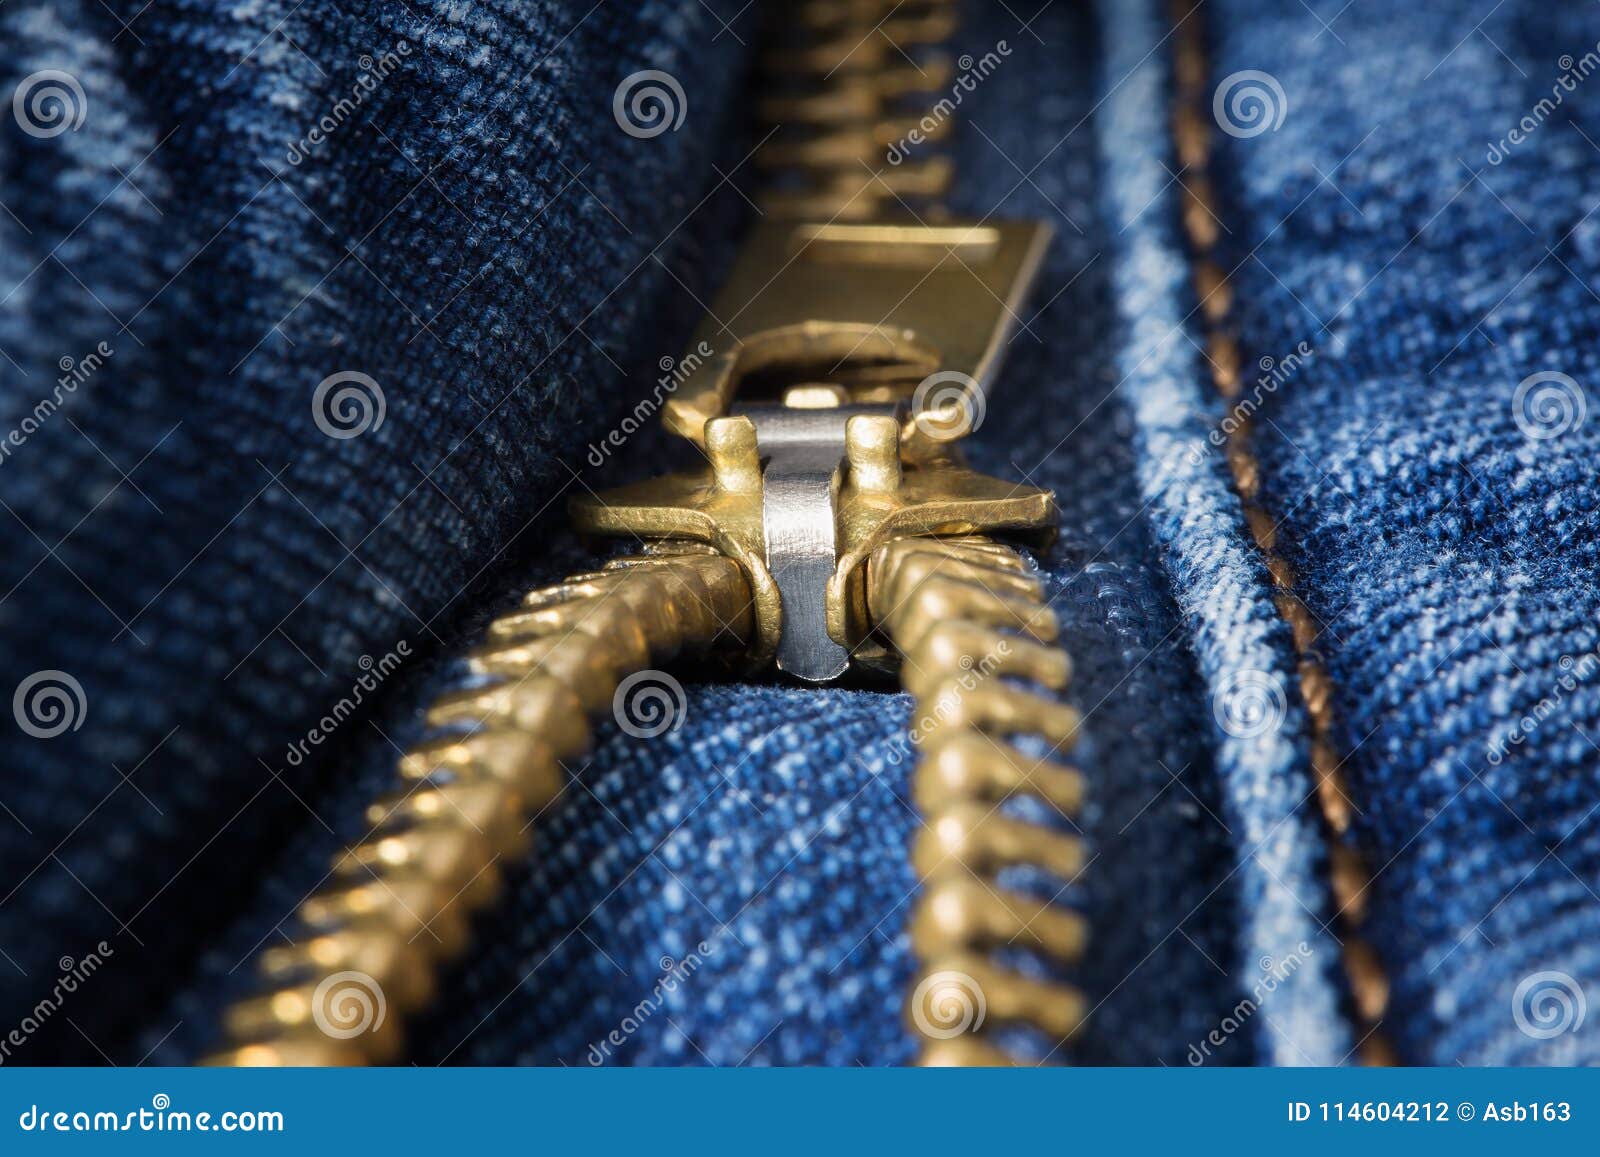 Unzipped Zipper Closeup on Jeans Stock Photo - Image of clasp, macro ...